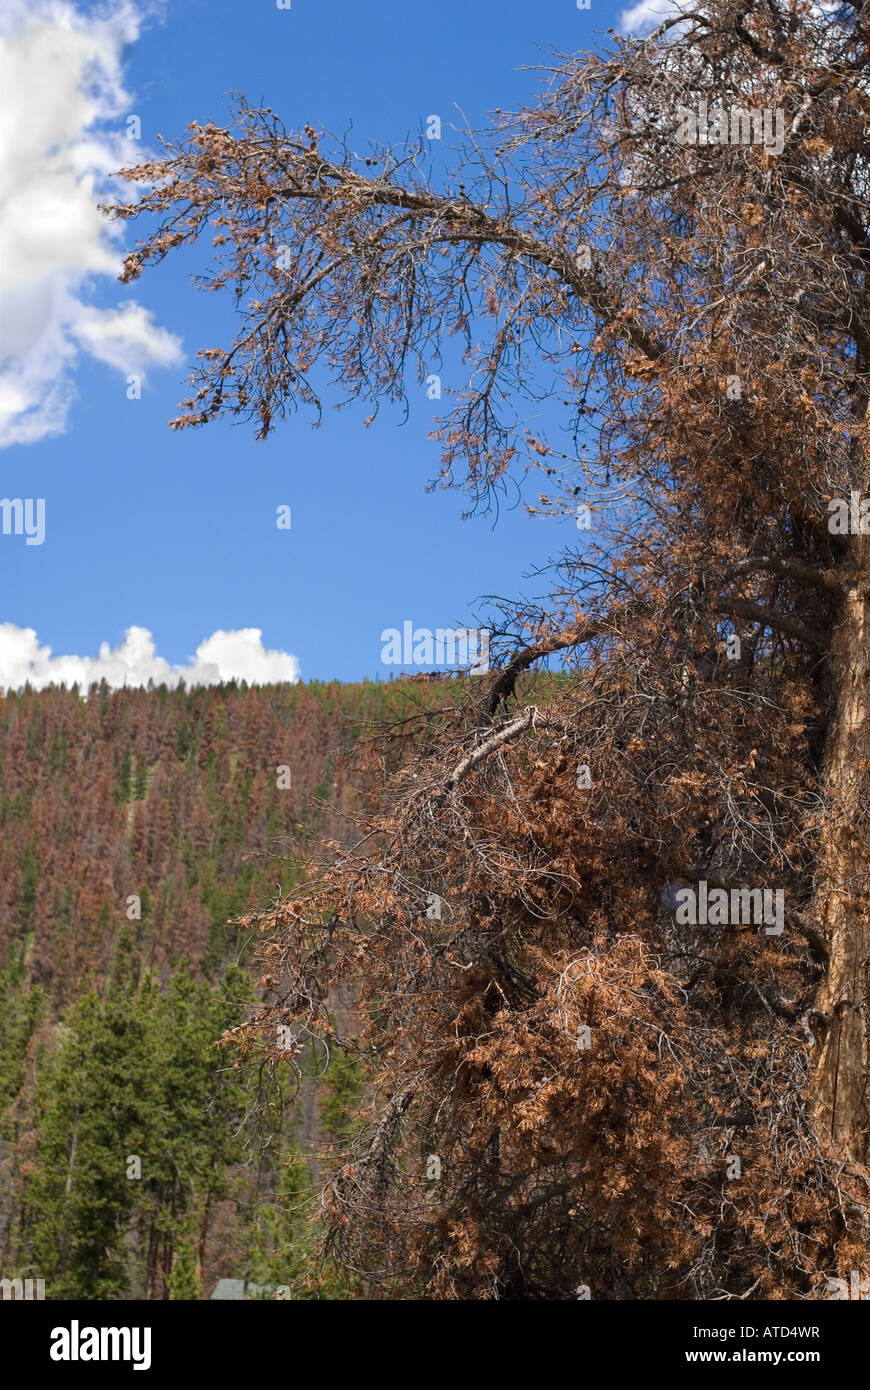 Damage caused by mountain pine beetle near Breckenridge Colorado Stock Photo